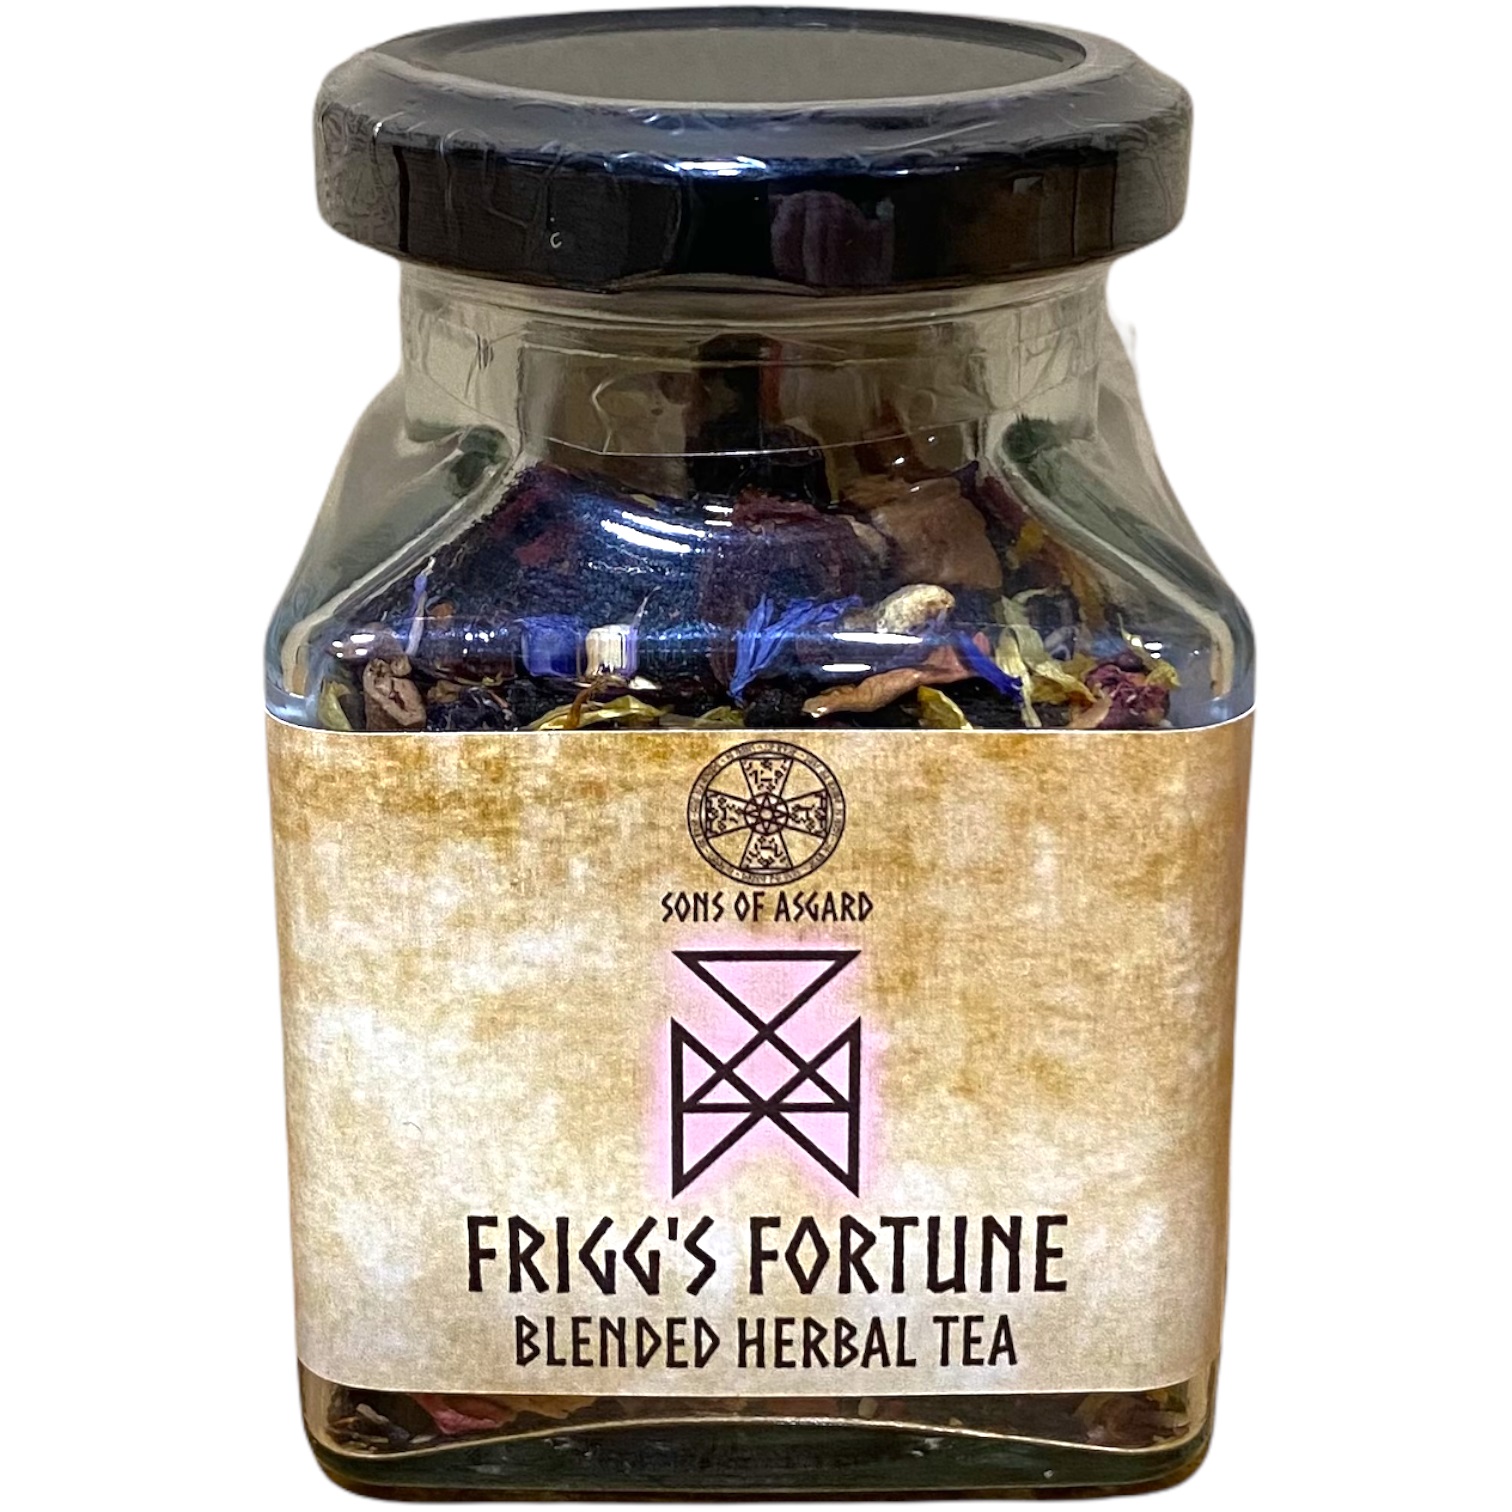 Frigg's Fortune - Blended Herbal Tea